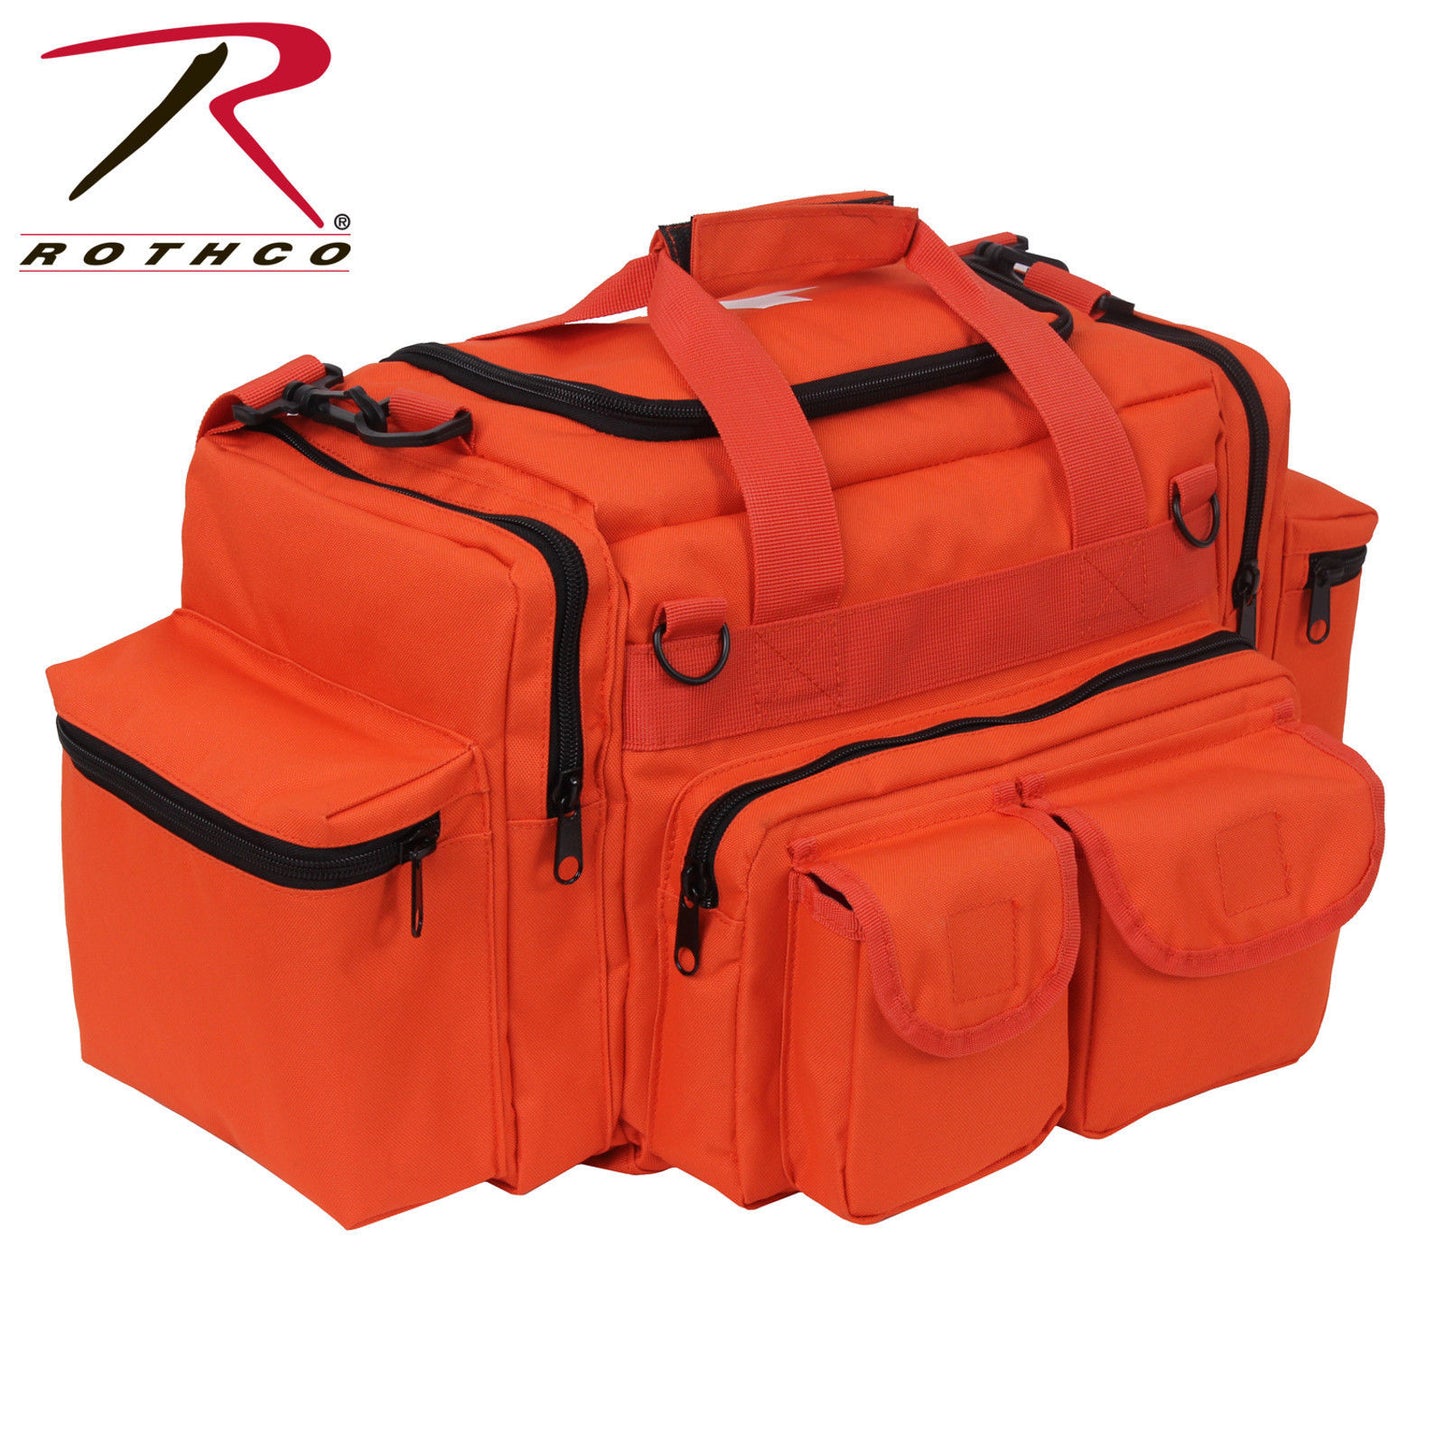 Deluxe Orange EMT/EMS Bag With Supplies - Rothco EMT Kit